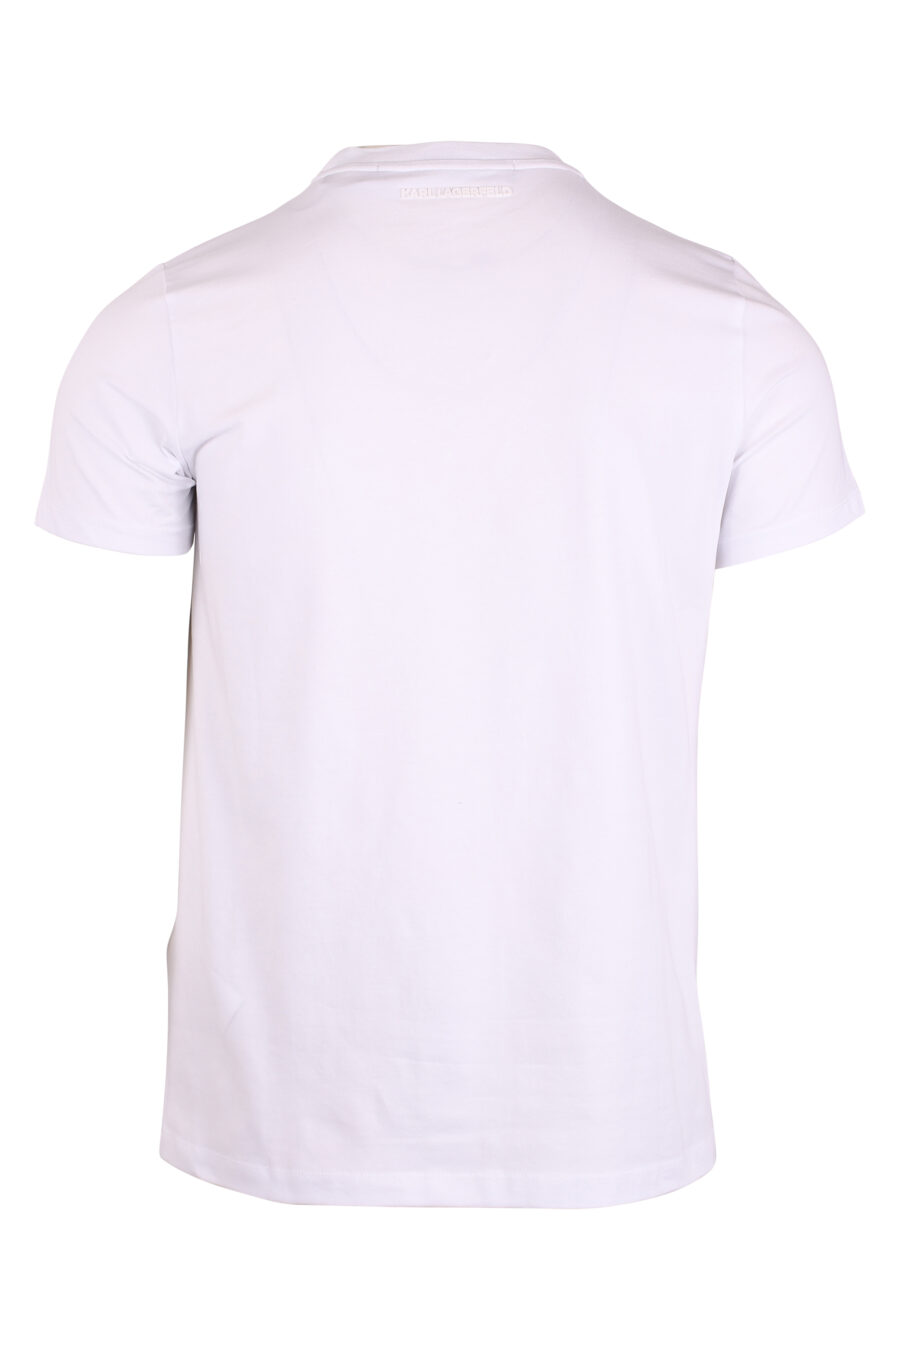 Camiseta blanca con logo "rue st-guillaume" de goma - IMG 4333